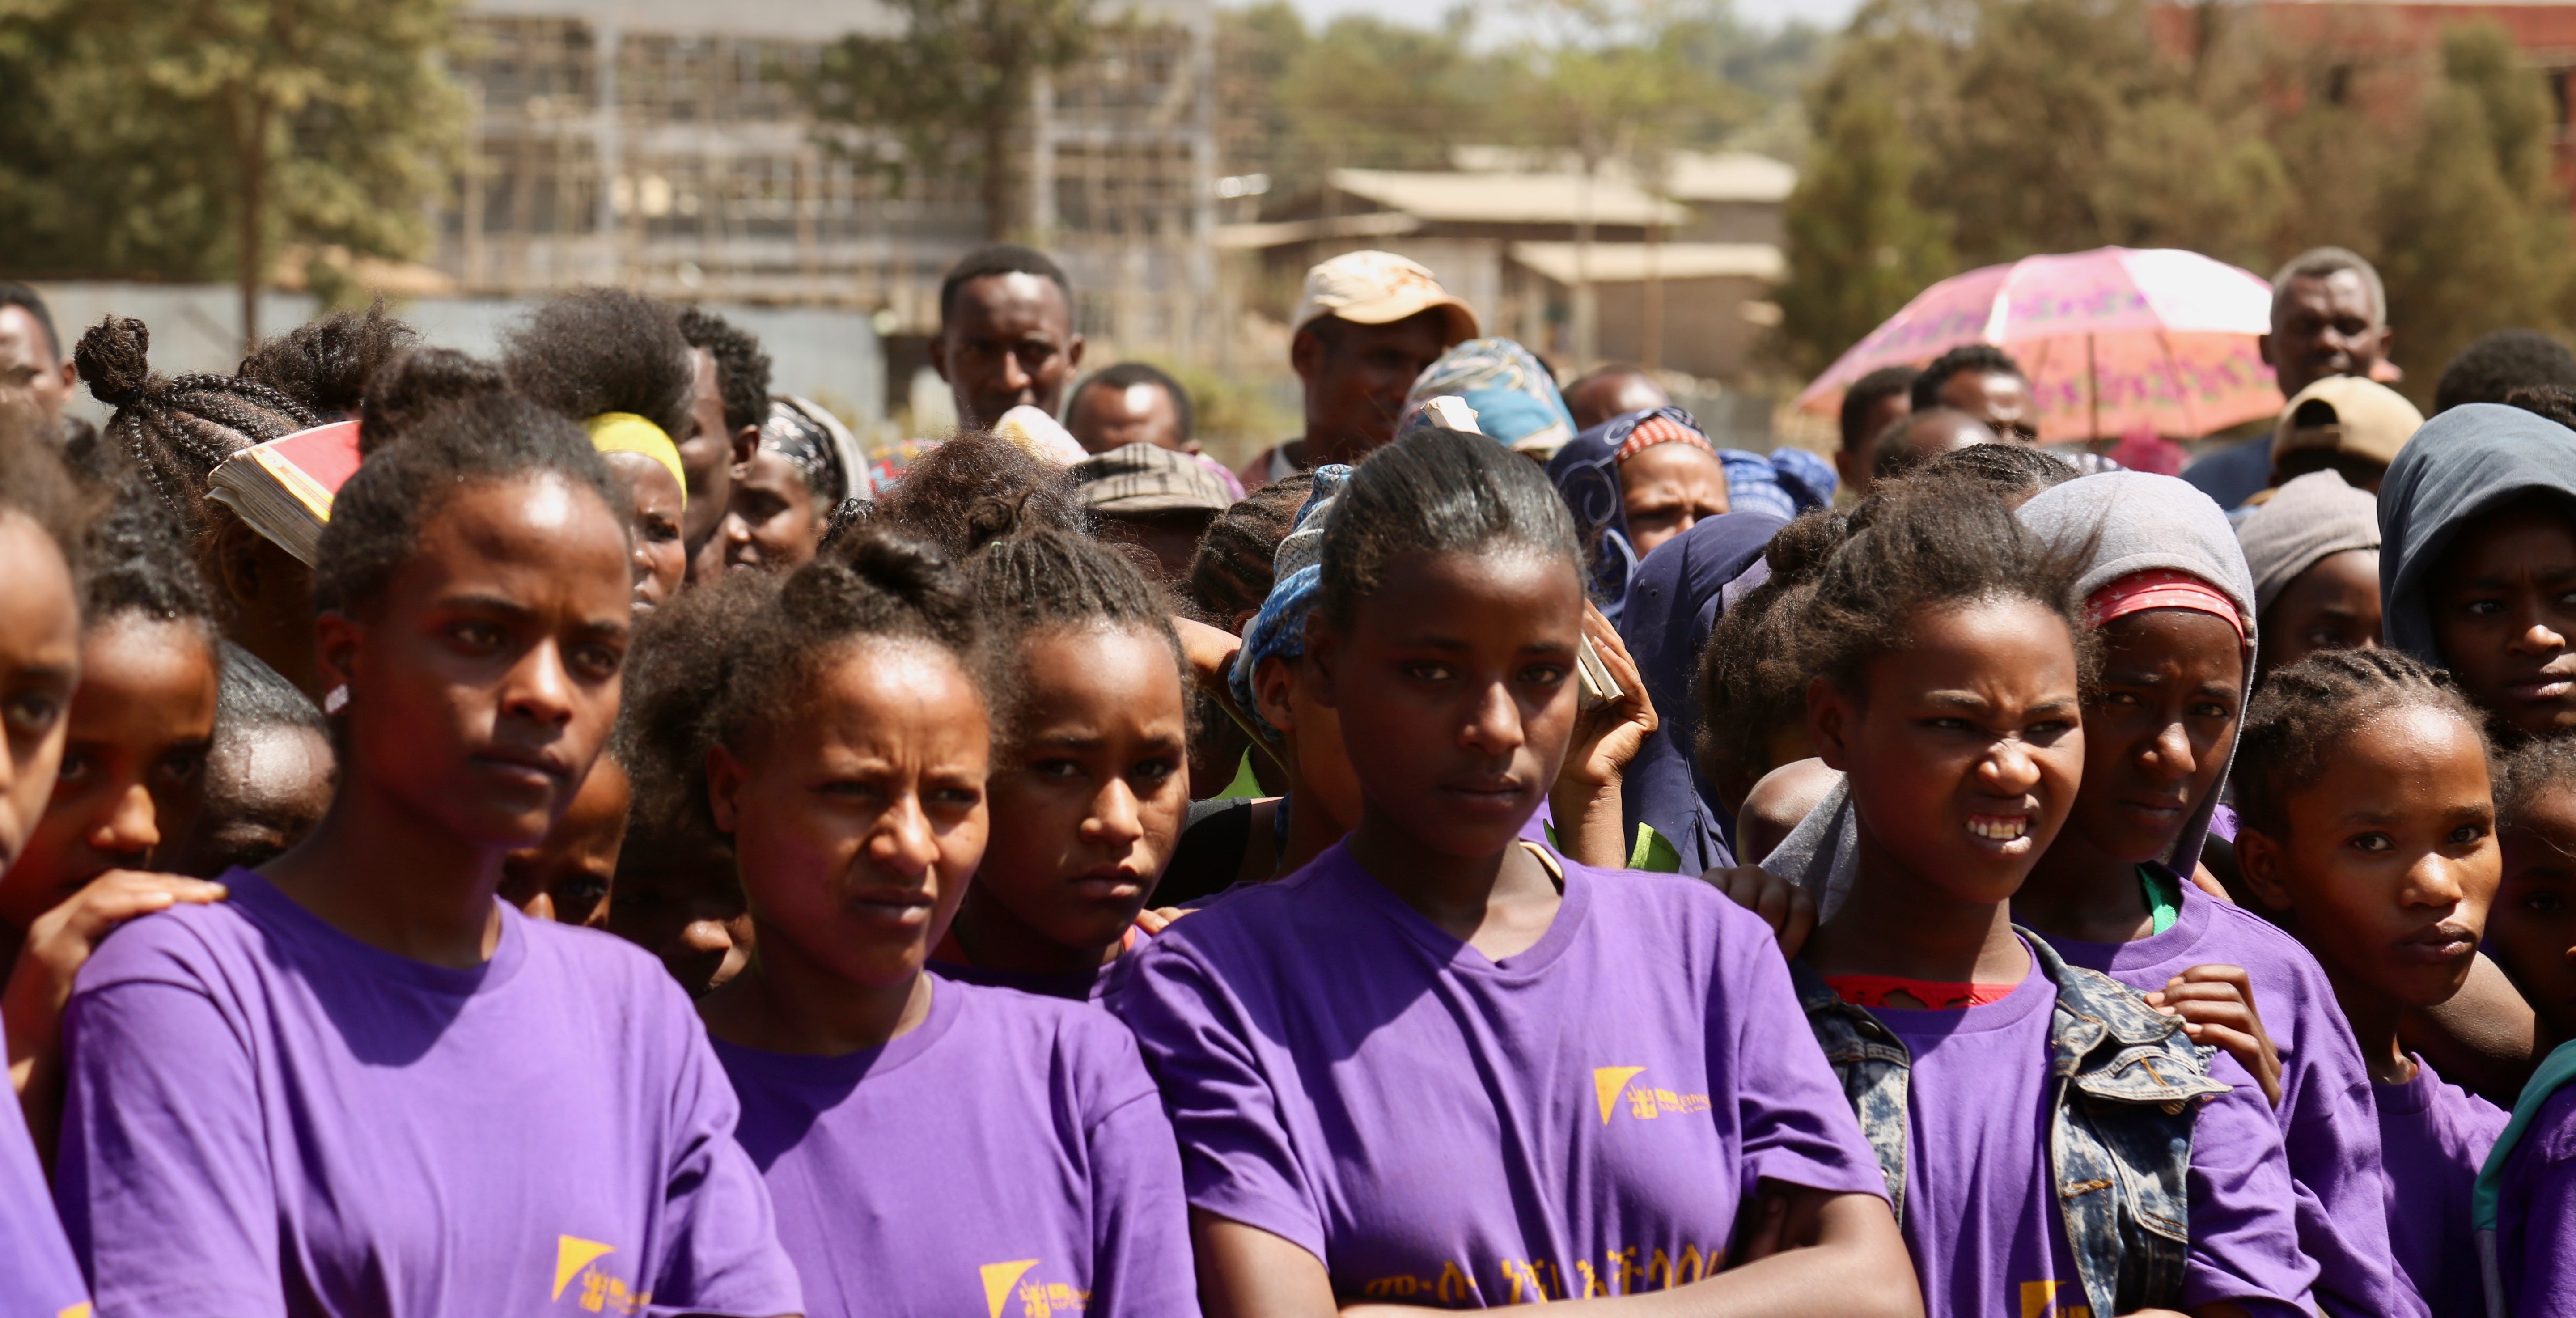 Courageous girls change attitudes about FGM in Ethiopia